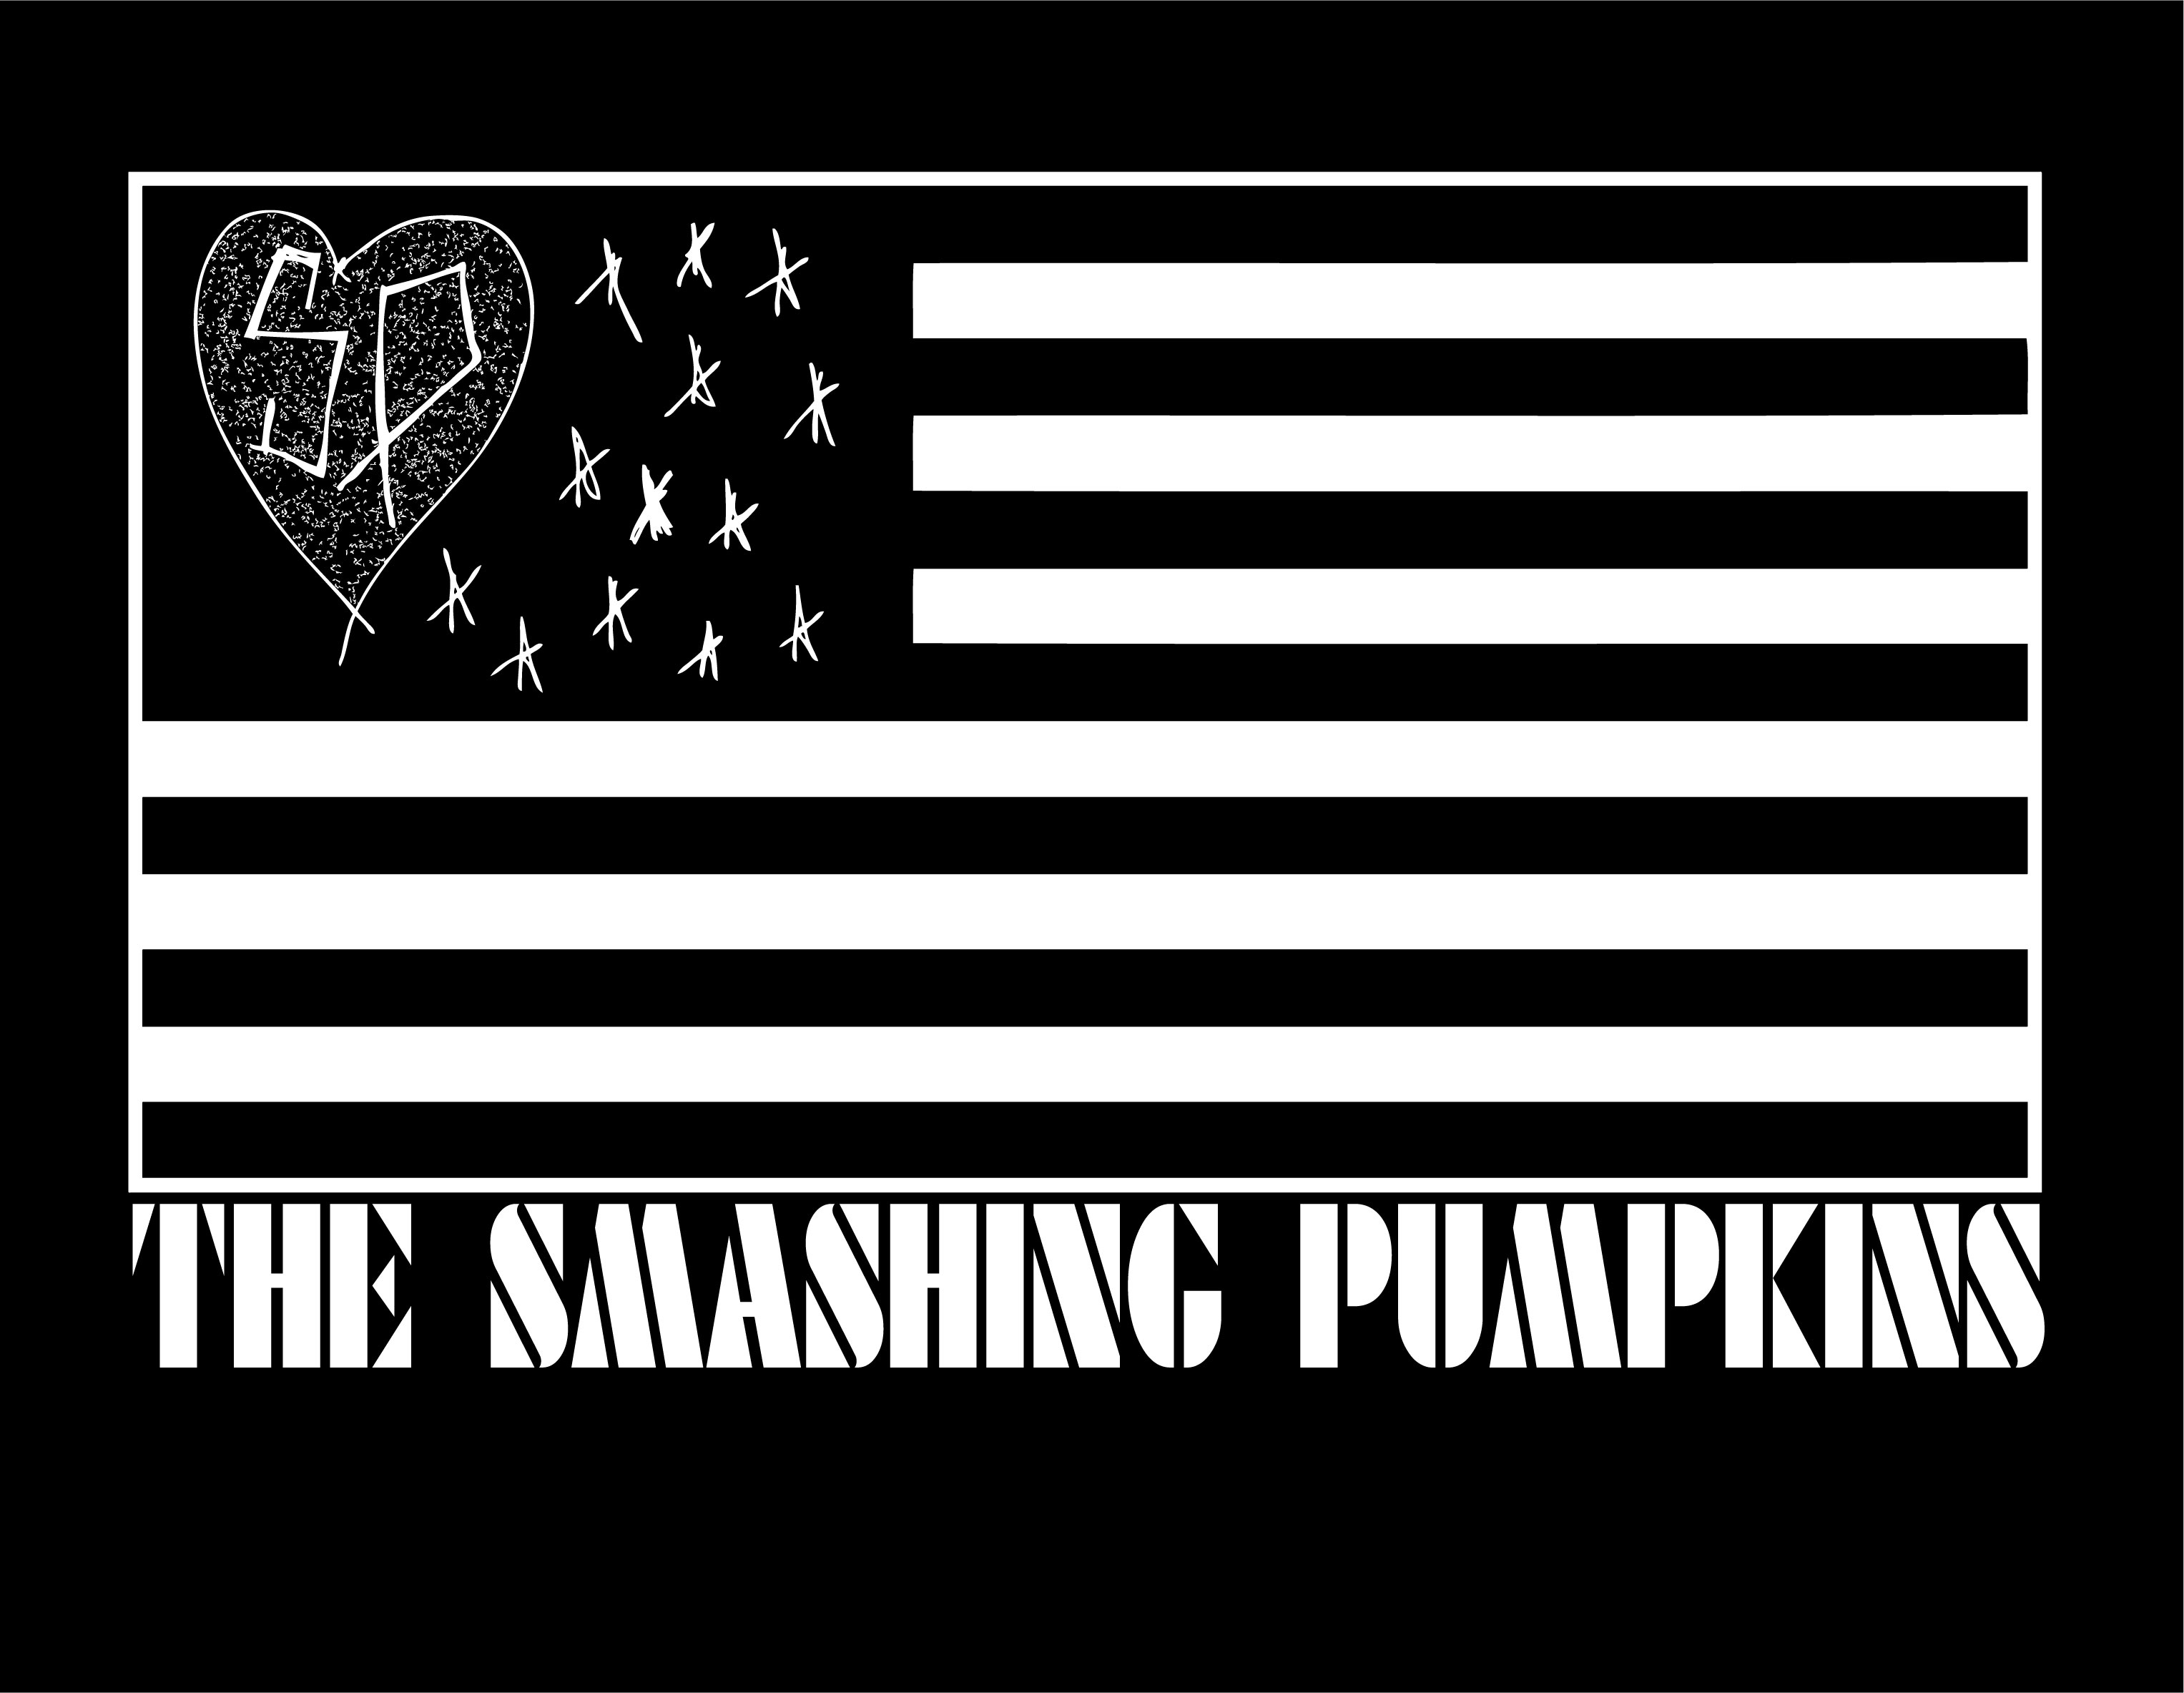 The Sound of Geek: The Smashing Pumpkins Are Still Going. utbgeek.com. help...